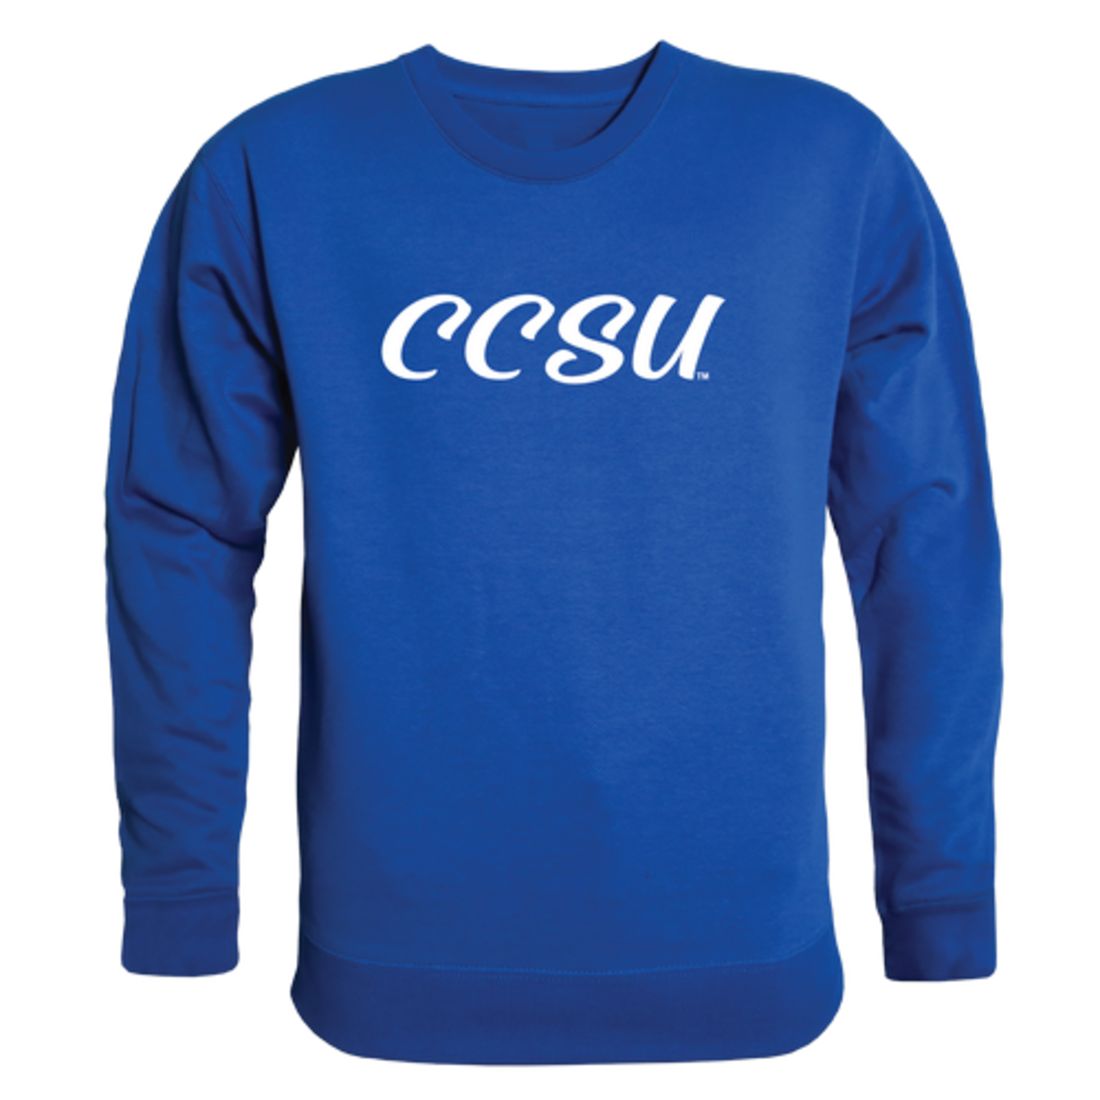 CCSU Central Connecticut State University Blue Devils Script Crewneck Pullover Sweatshirt Sweater Heather Charcoal-Campus-Wardrobe